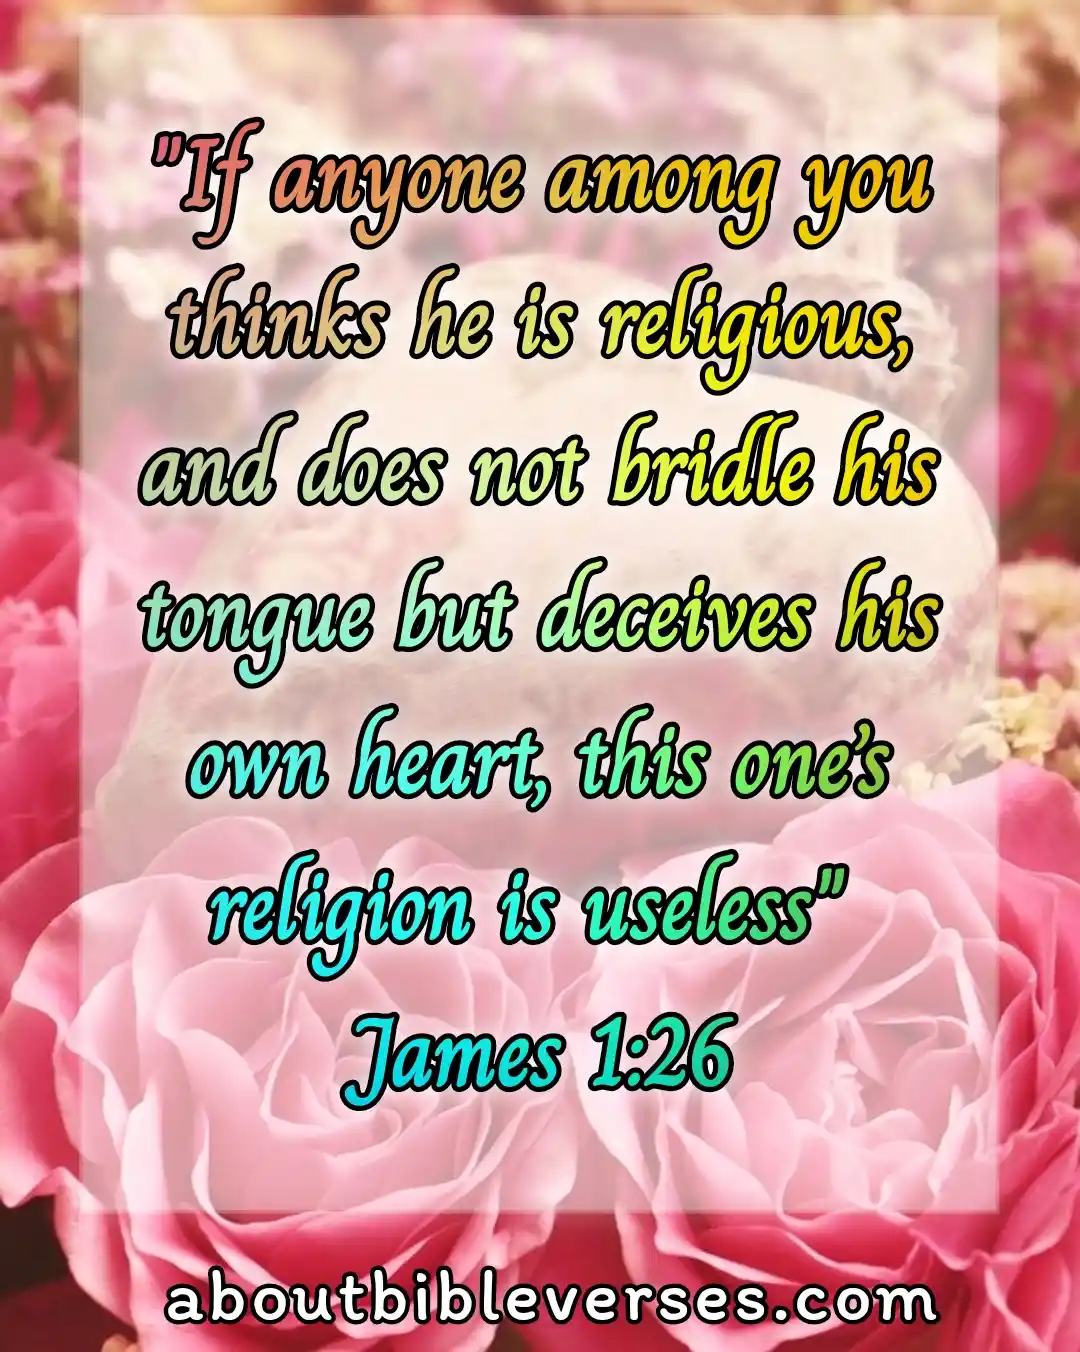 Bible Verses About Gossip And Slander (James 1:26)